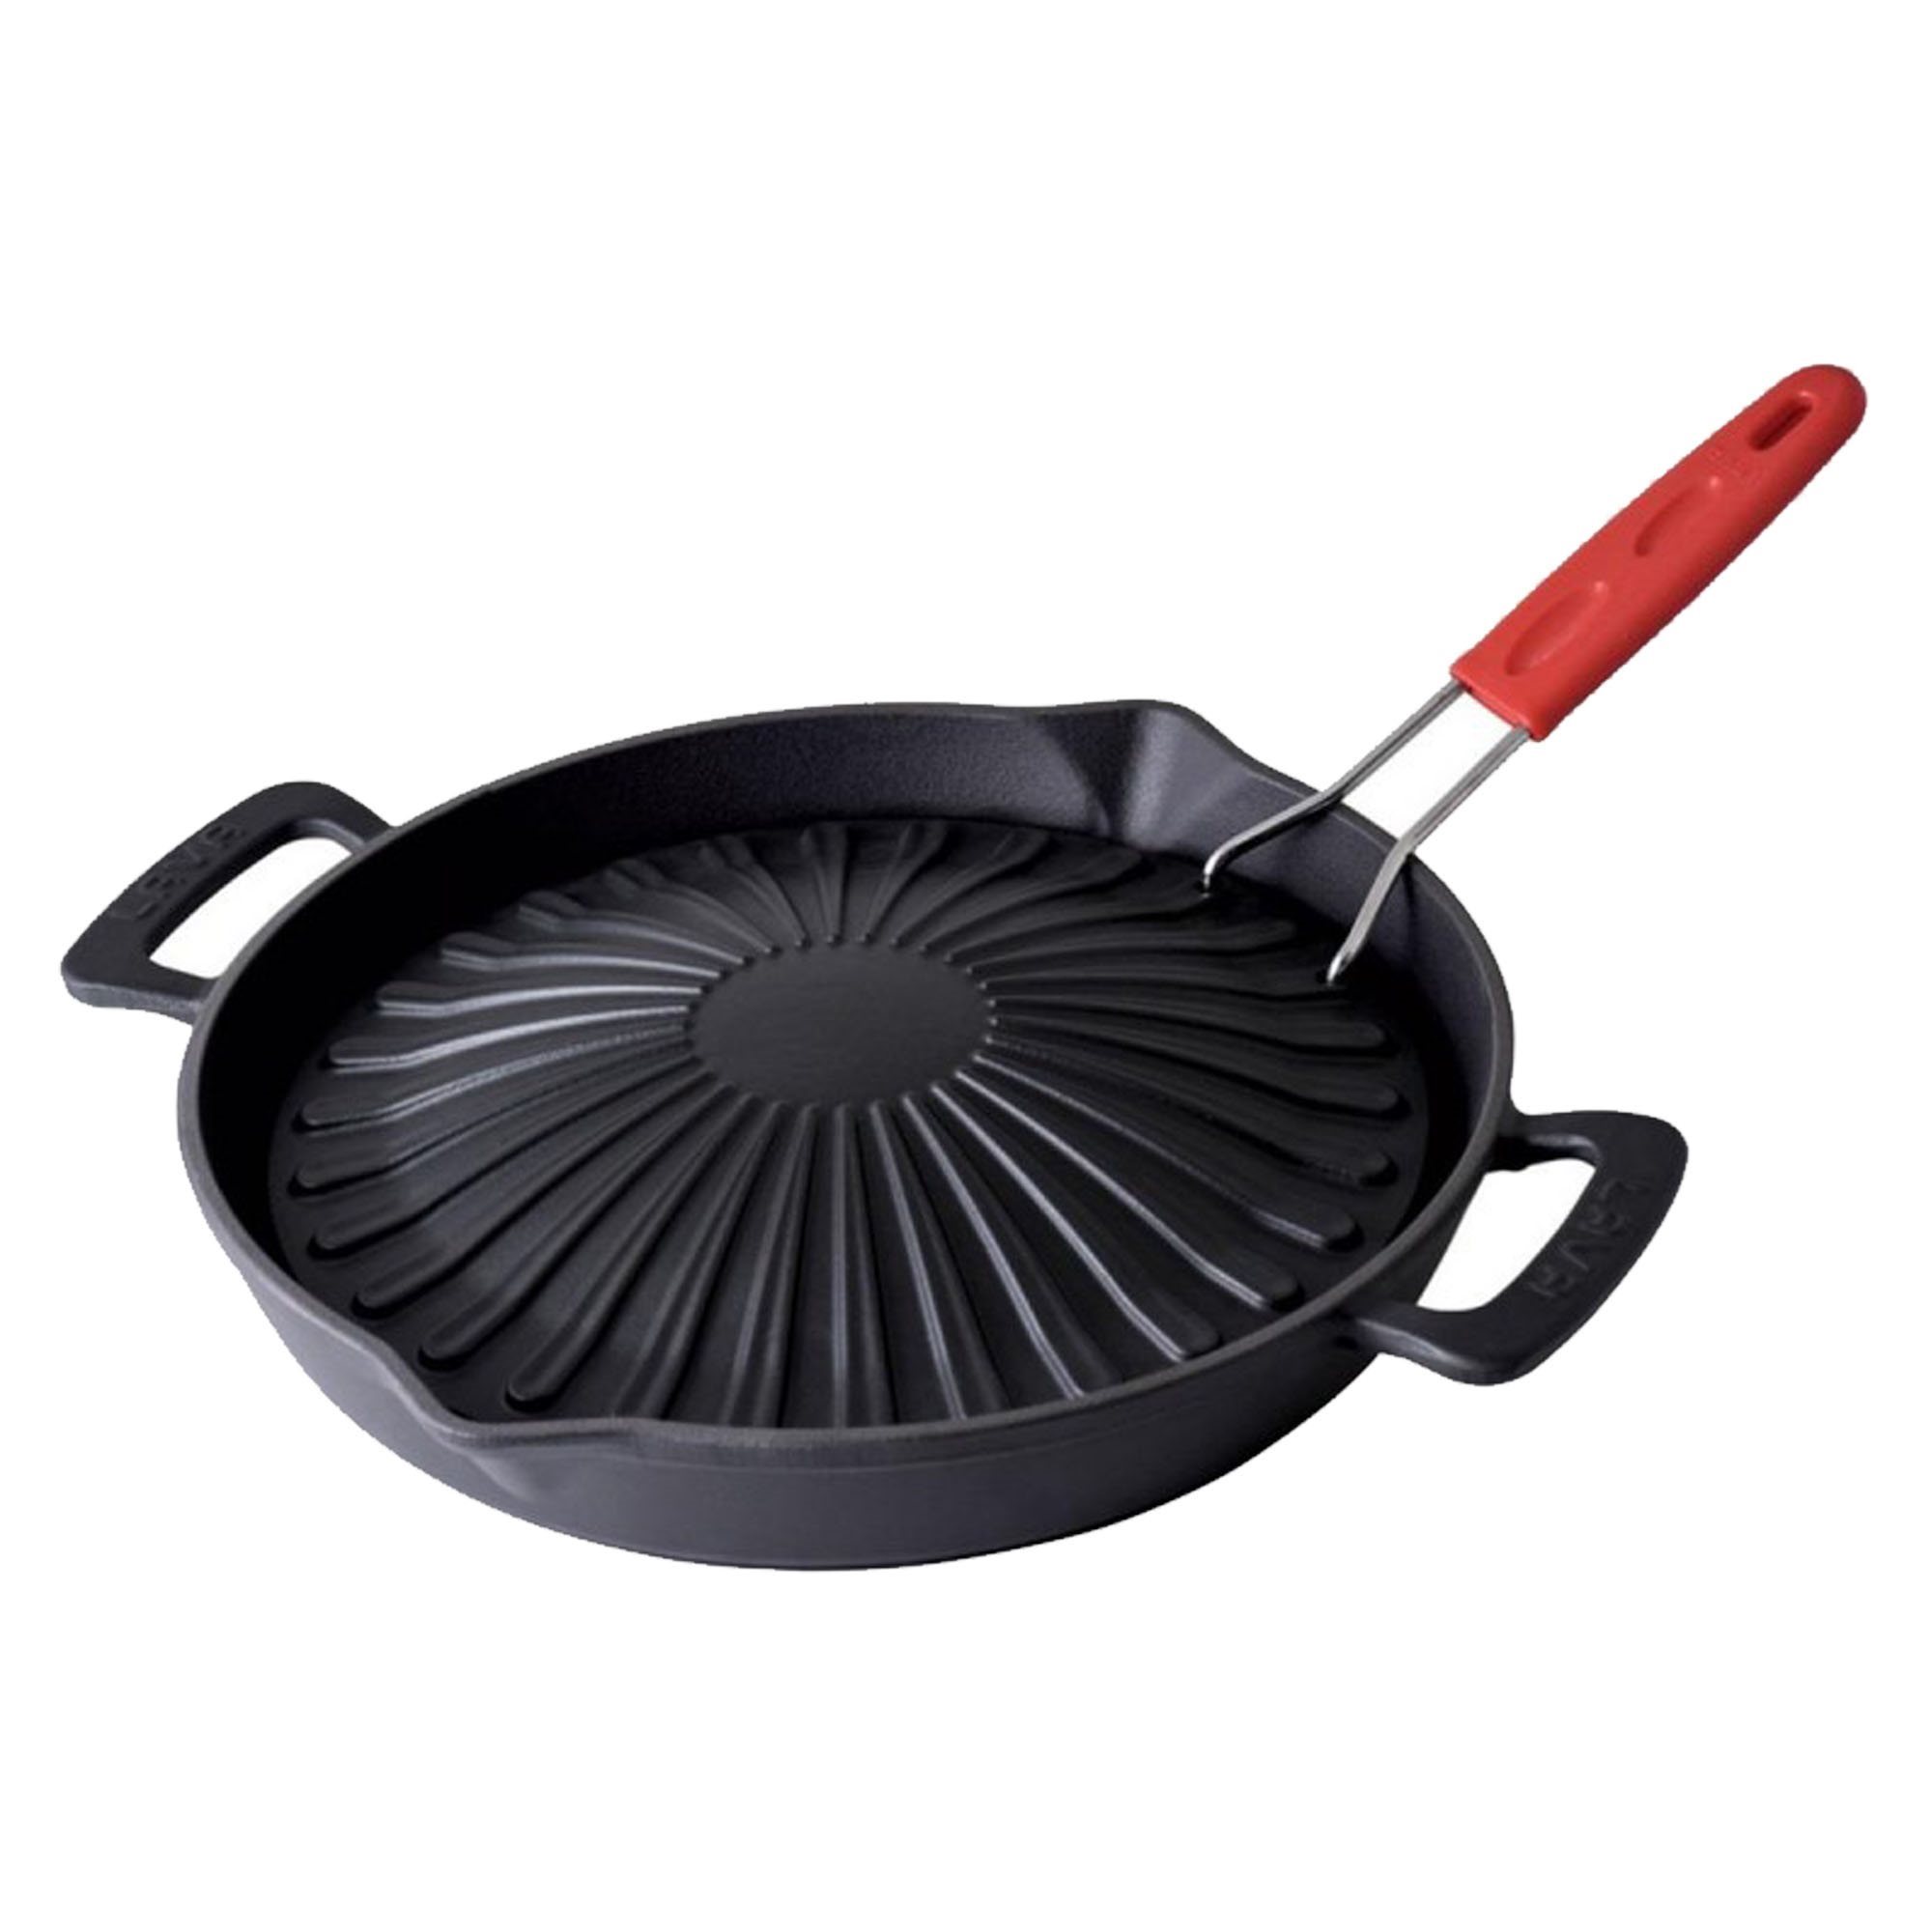 Le Creuset cast-iron pancake pan 32 cm, black  Advantageously shopping at